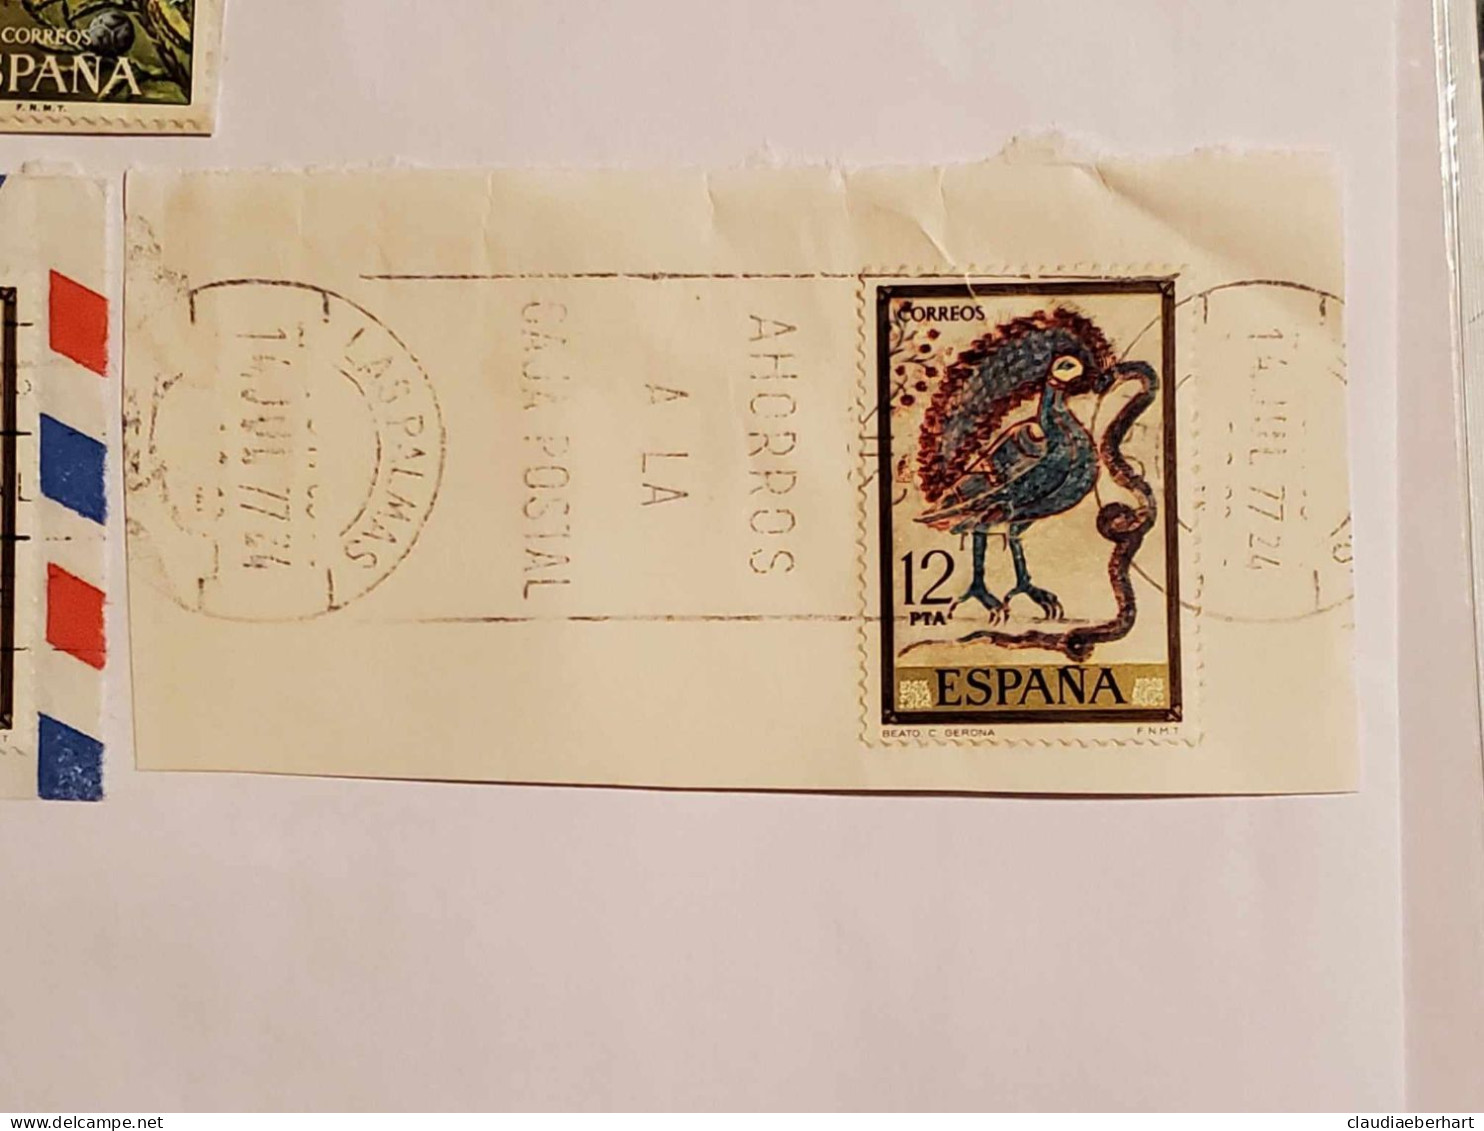 Beato C. Gerona - Used Stamps